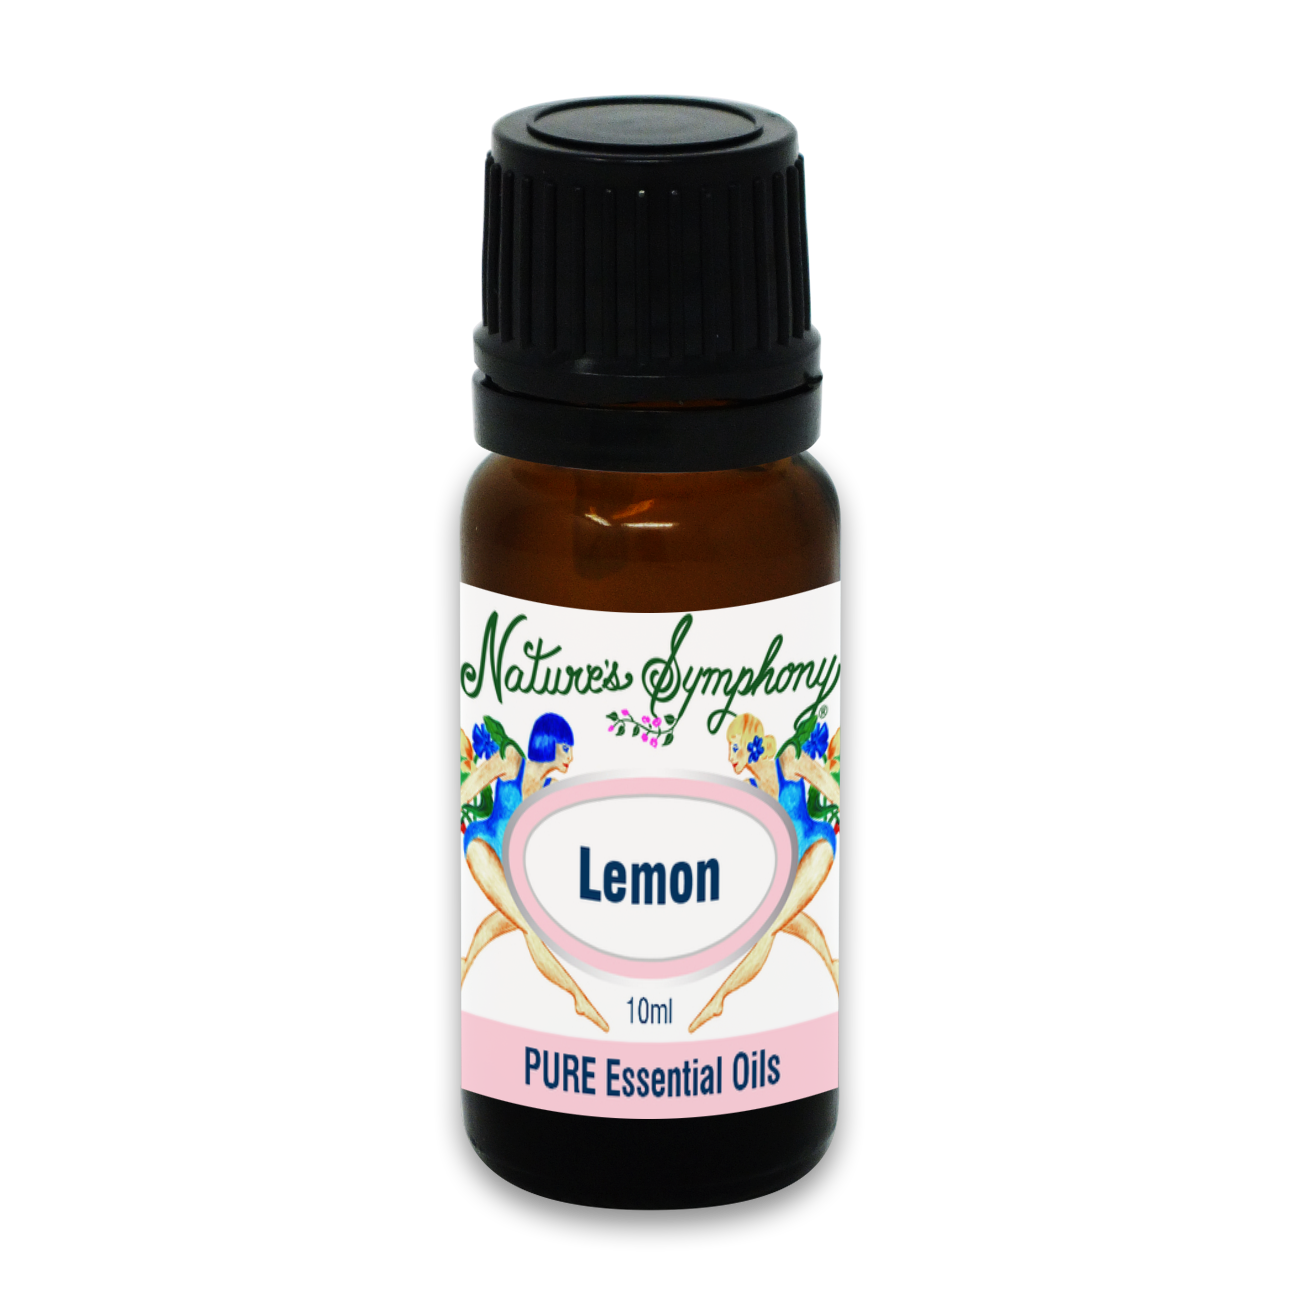 Lemon, Ambiance Diffusion oil - 10ml